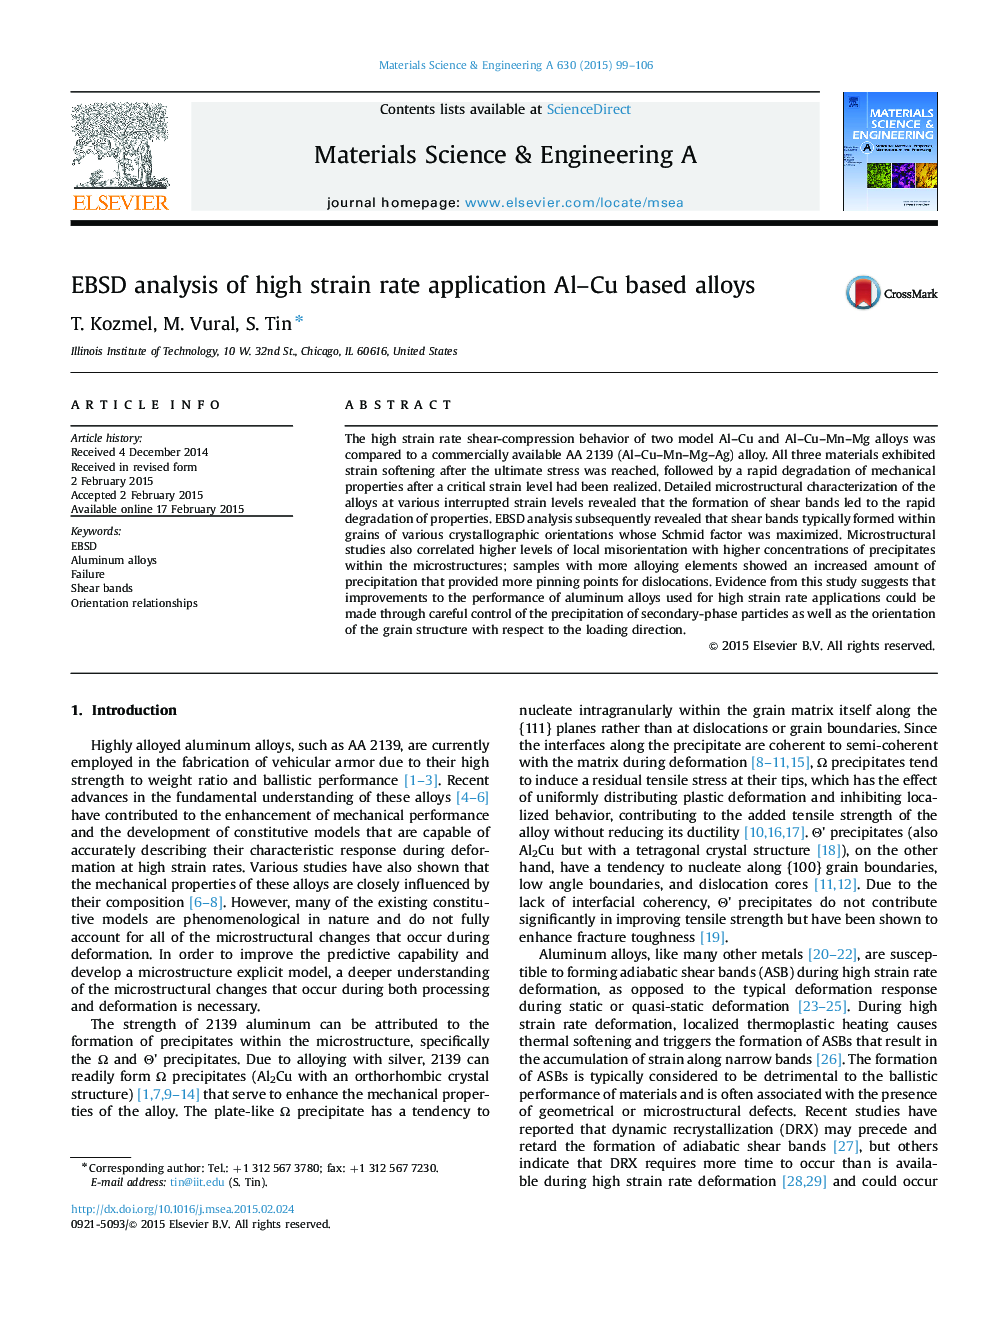 EBSD analysis of high strain rate application Al-Cu based alloys